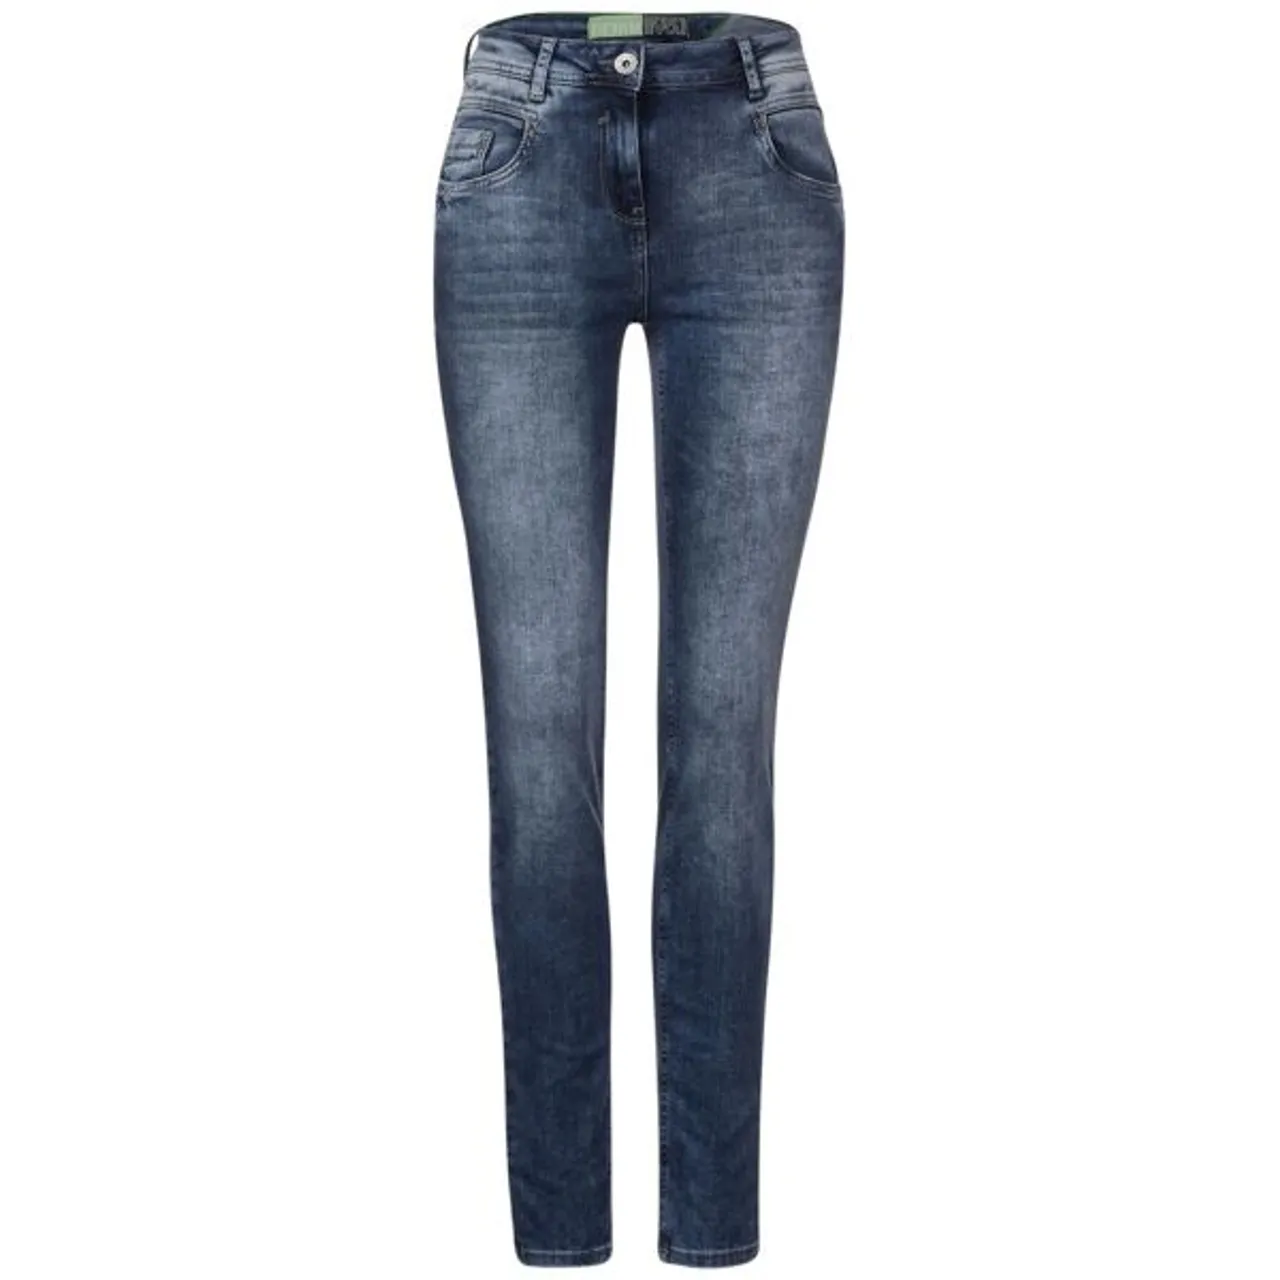 Skinny-fit-Jeans CECIL Gr. 32, Länge 32, blau (mid blue used wash) Damen Jeans Röhrenjeans